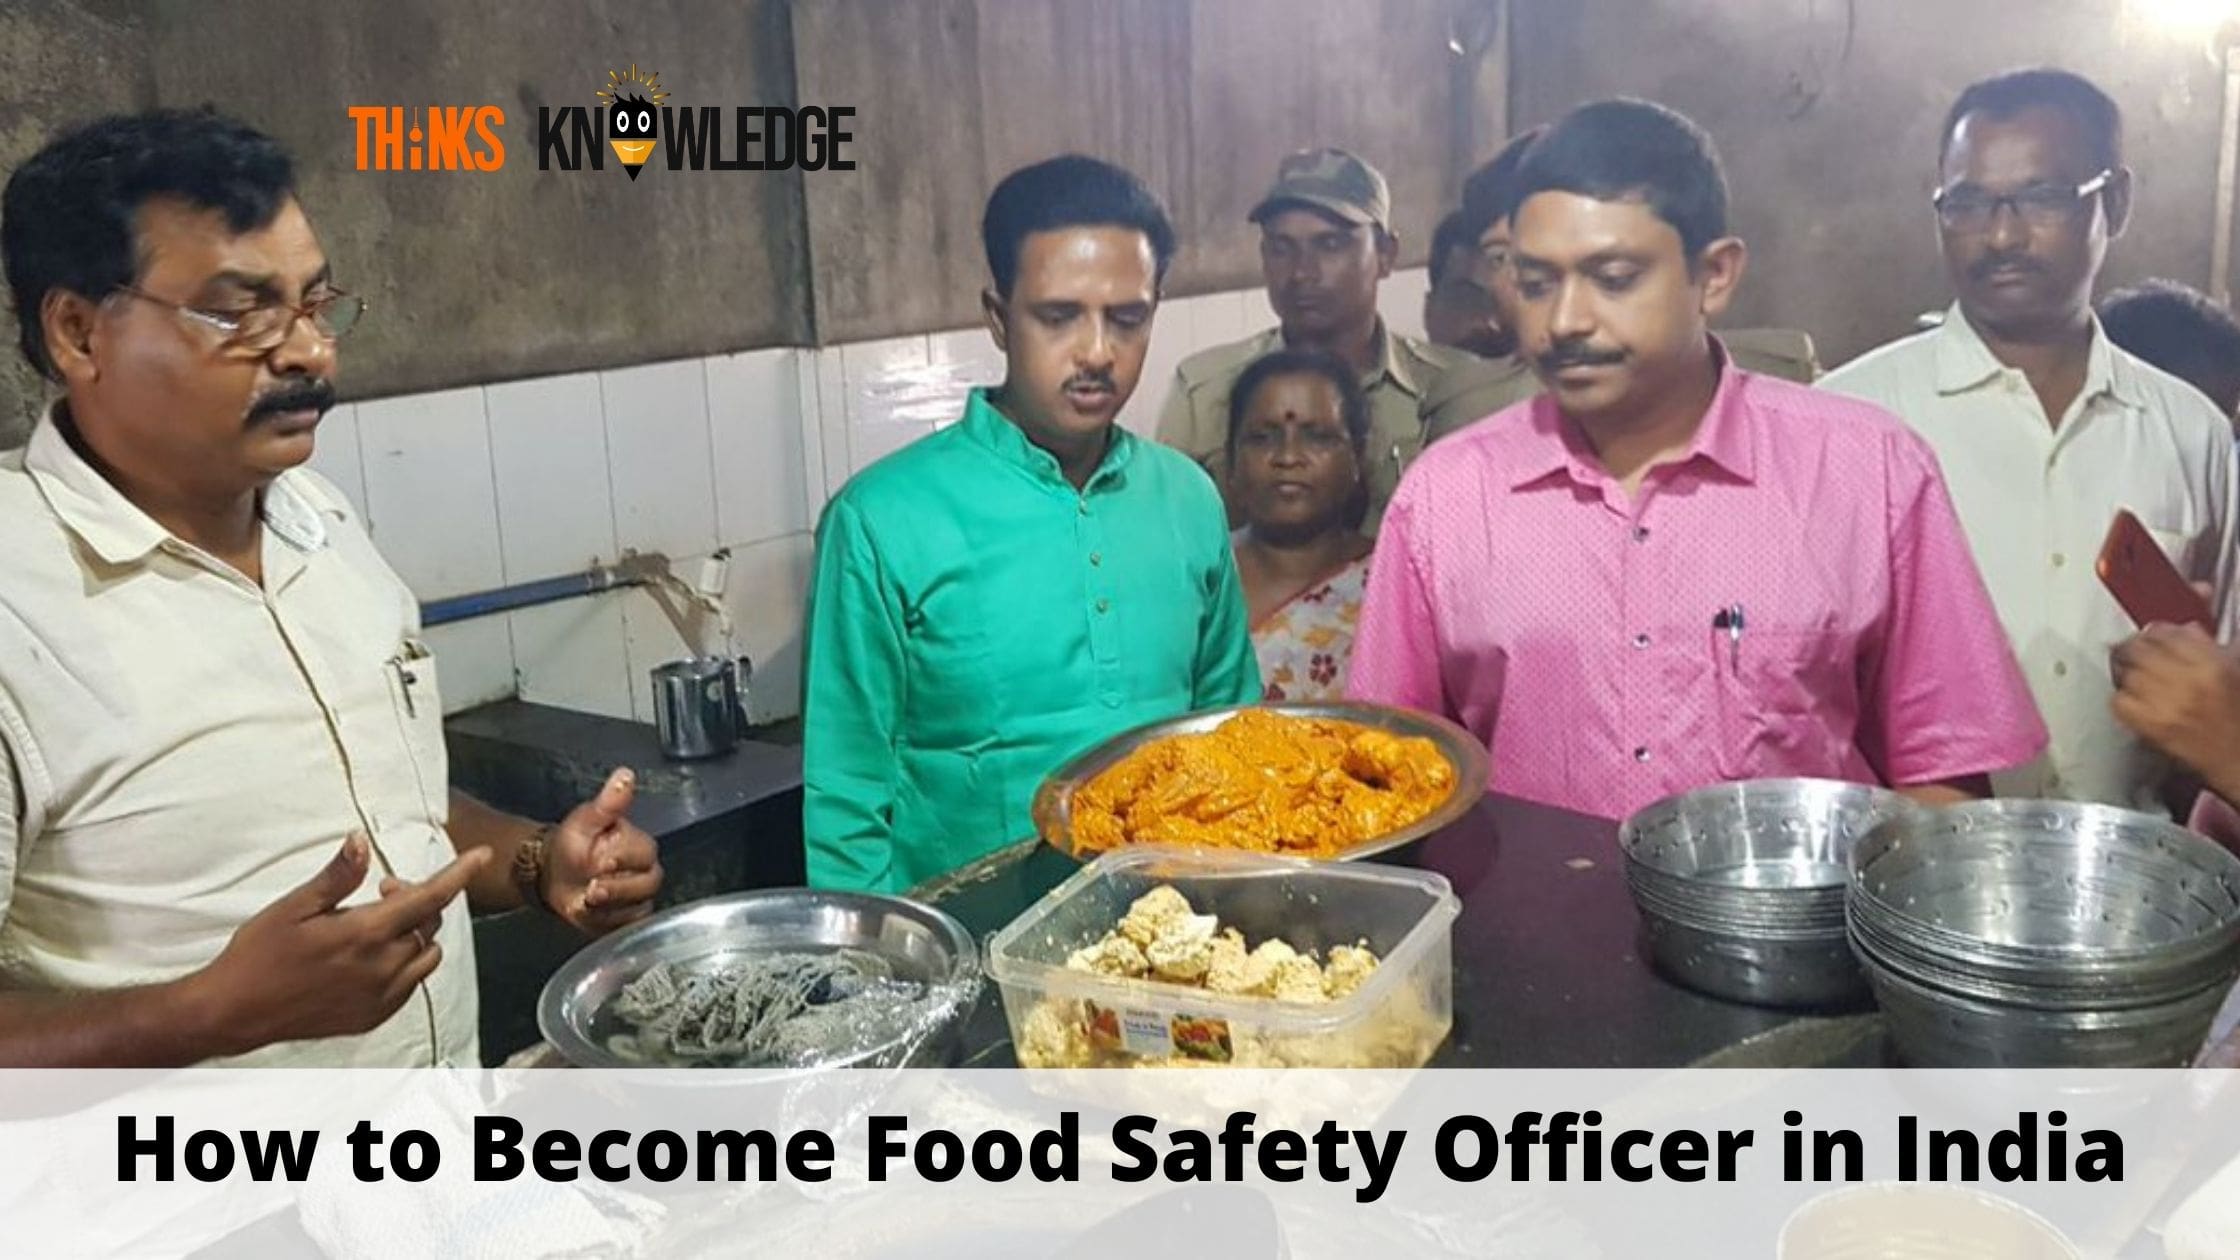 Food Safety Officer